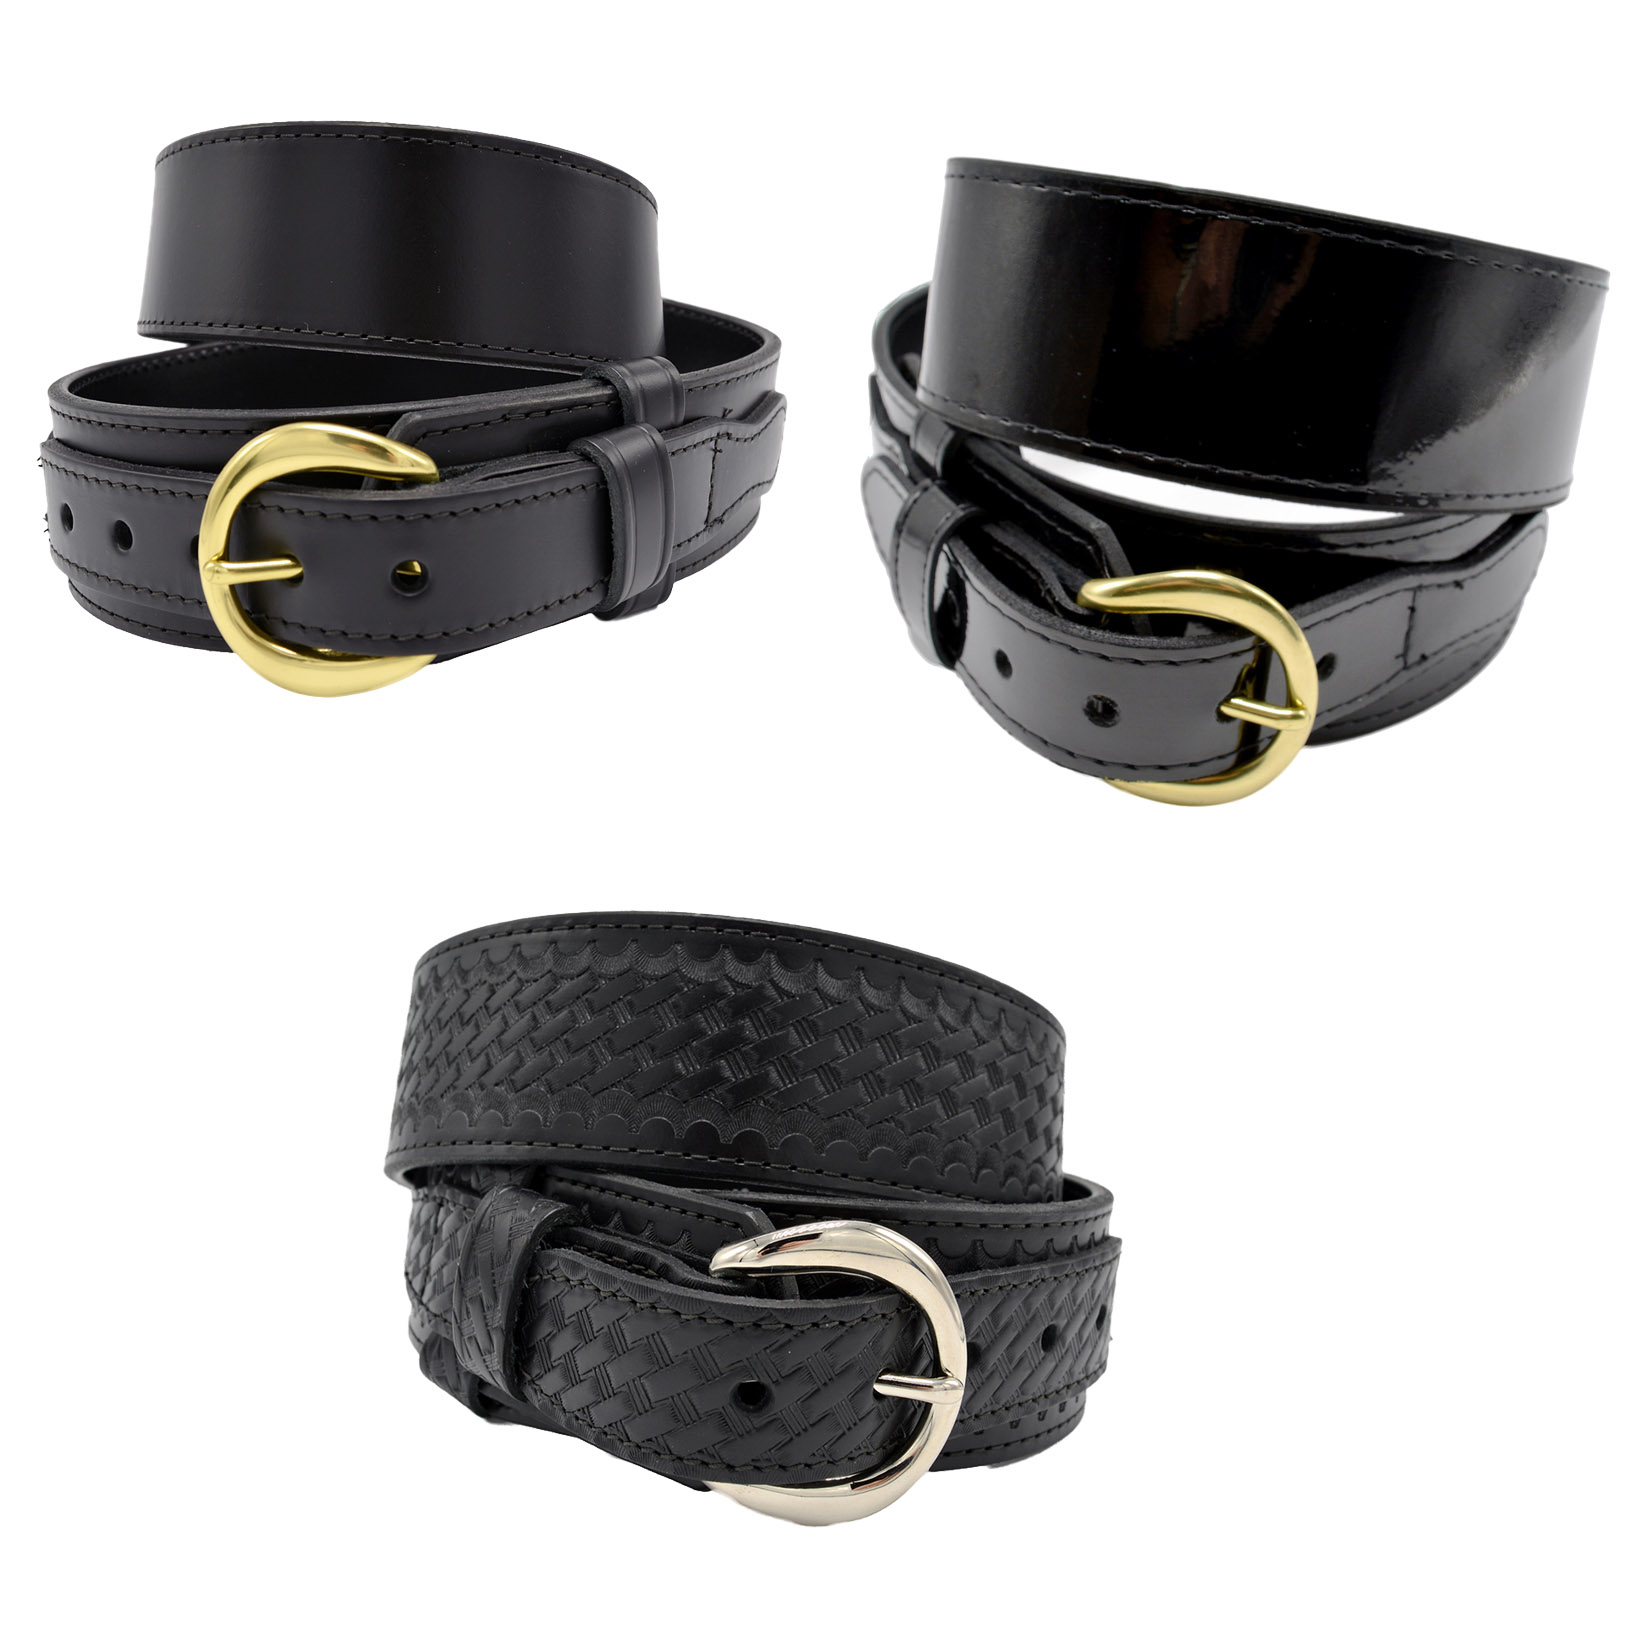 Cobra Tufskin Garrison Belt 1.75 Leather Basketweave Size 36 Work Uniform Police 